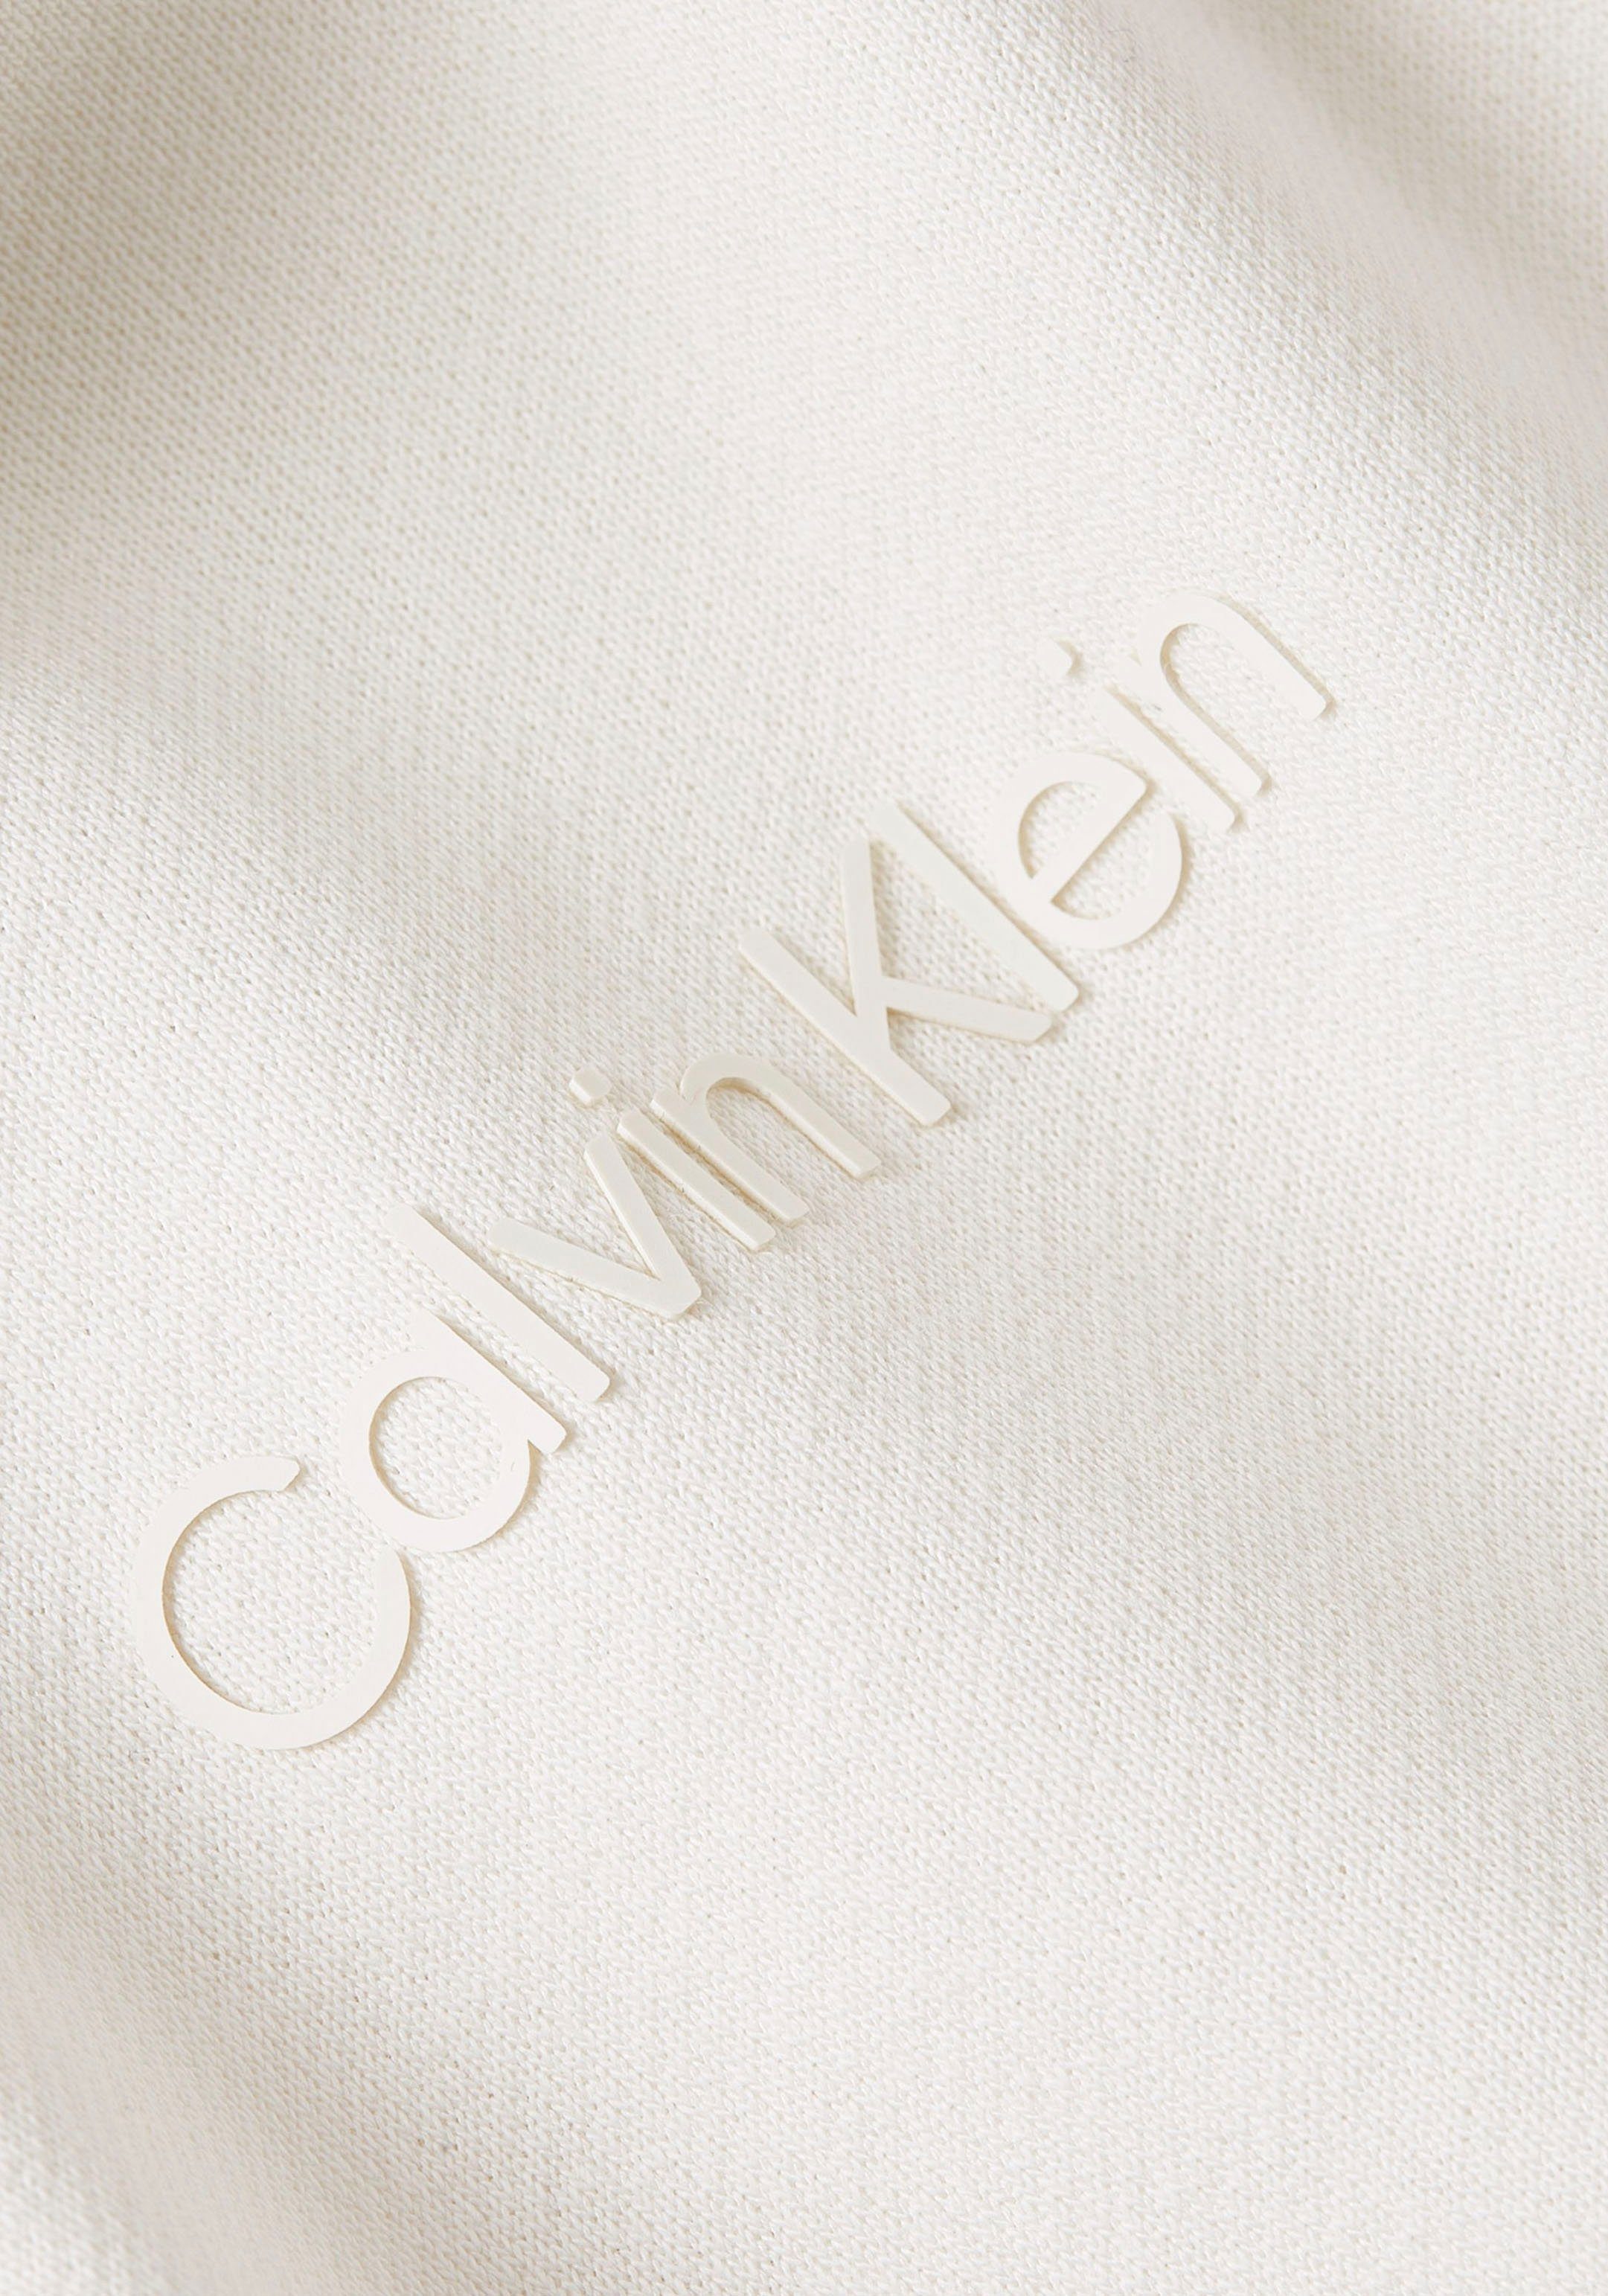 Calvin Klein weiß Sweatshirt - Kapuzensweatshirt Sport Hoodie PW